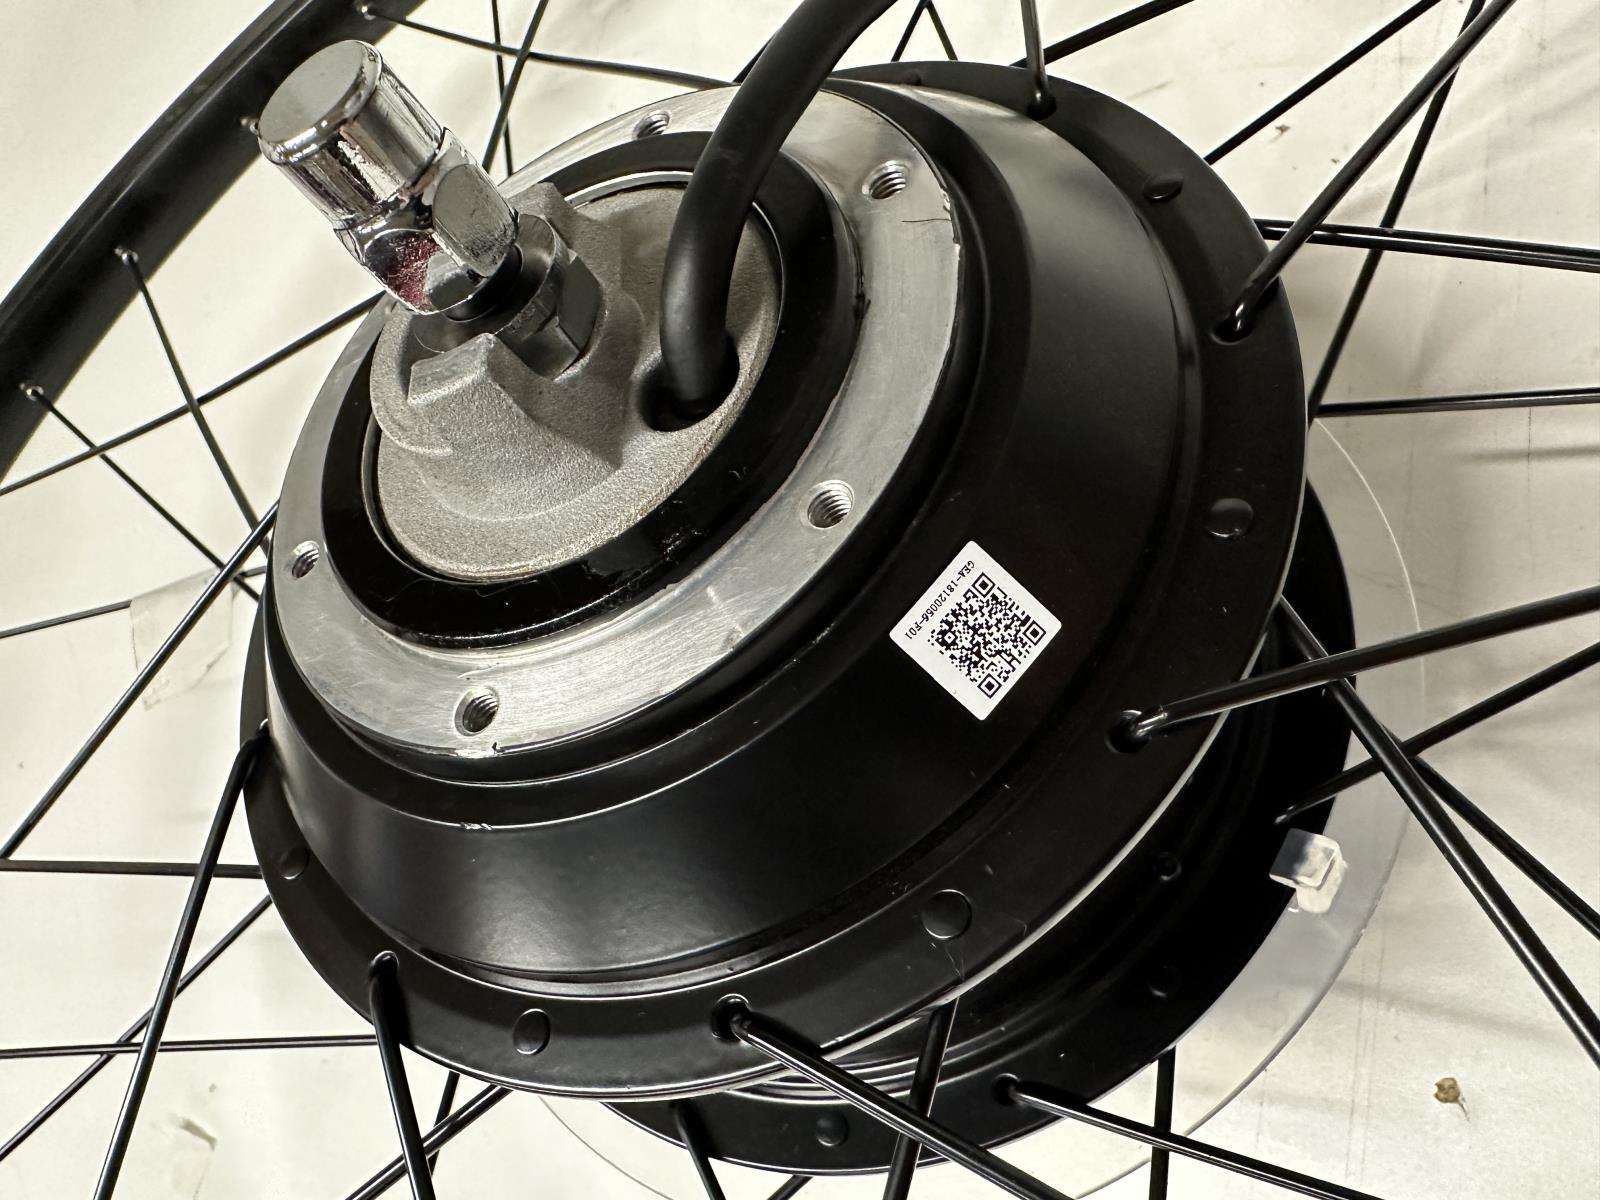 700c From E-bike IZIP Brio Electric Motor 36v Bike Rear Wheel Black Cassette New - Random Bike Parts